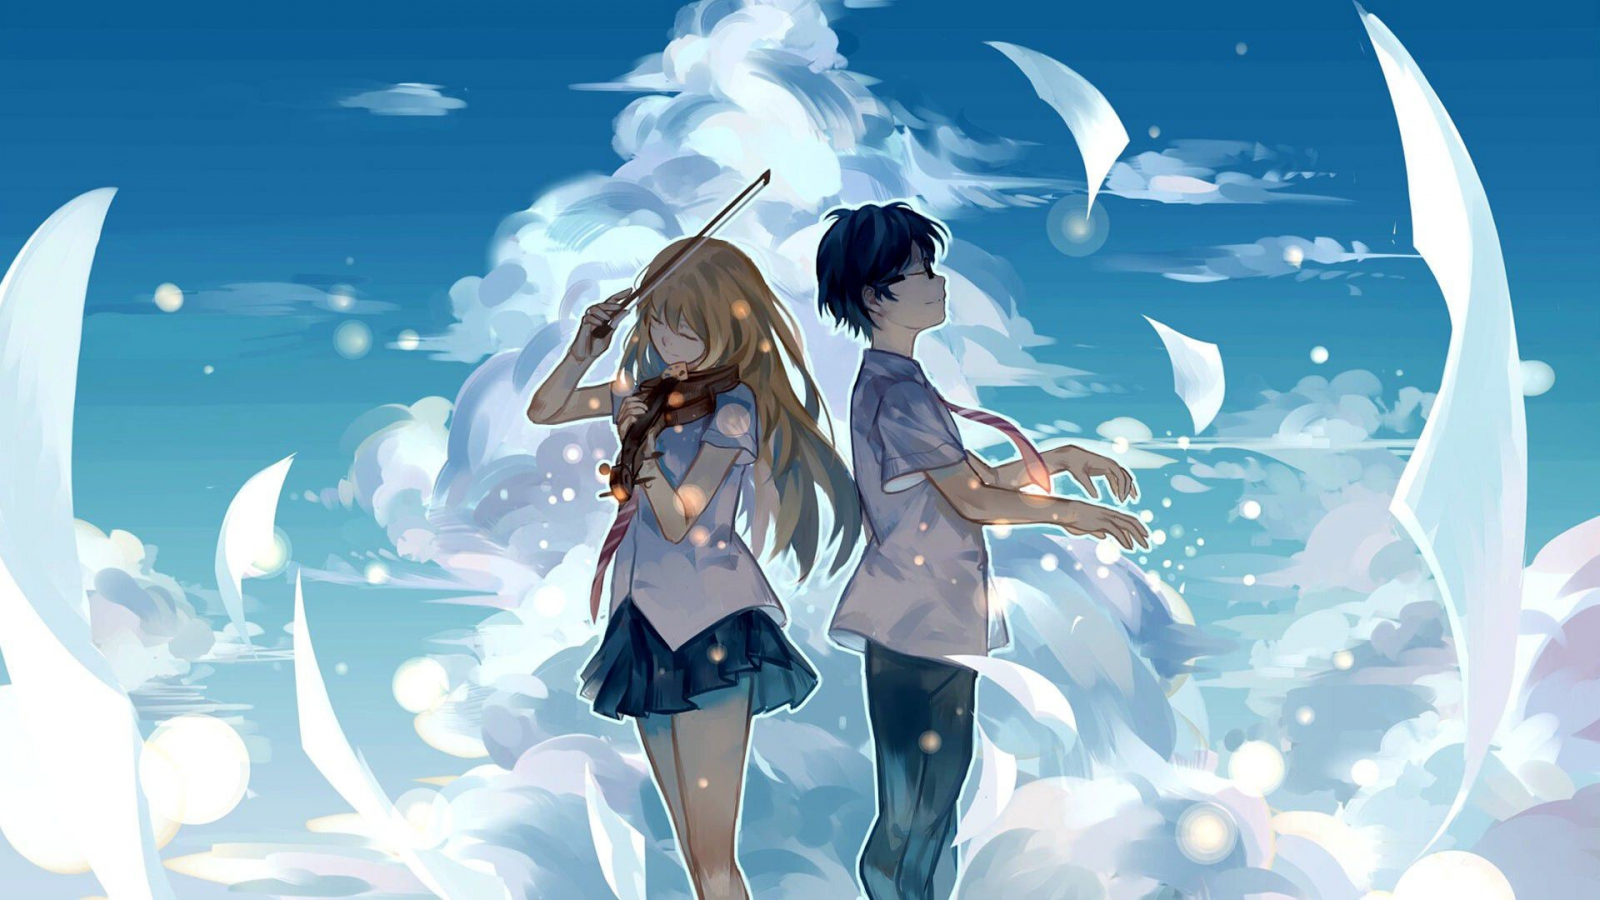 Cute Anime Couple Wallpaper Image